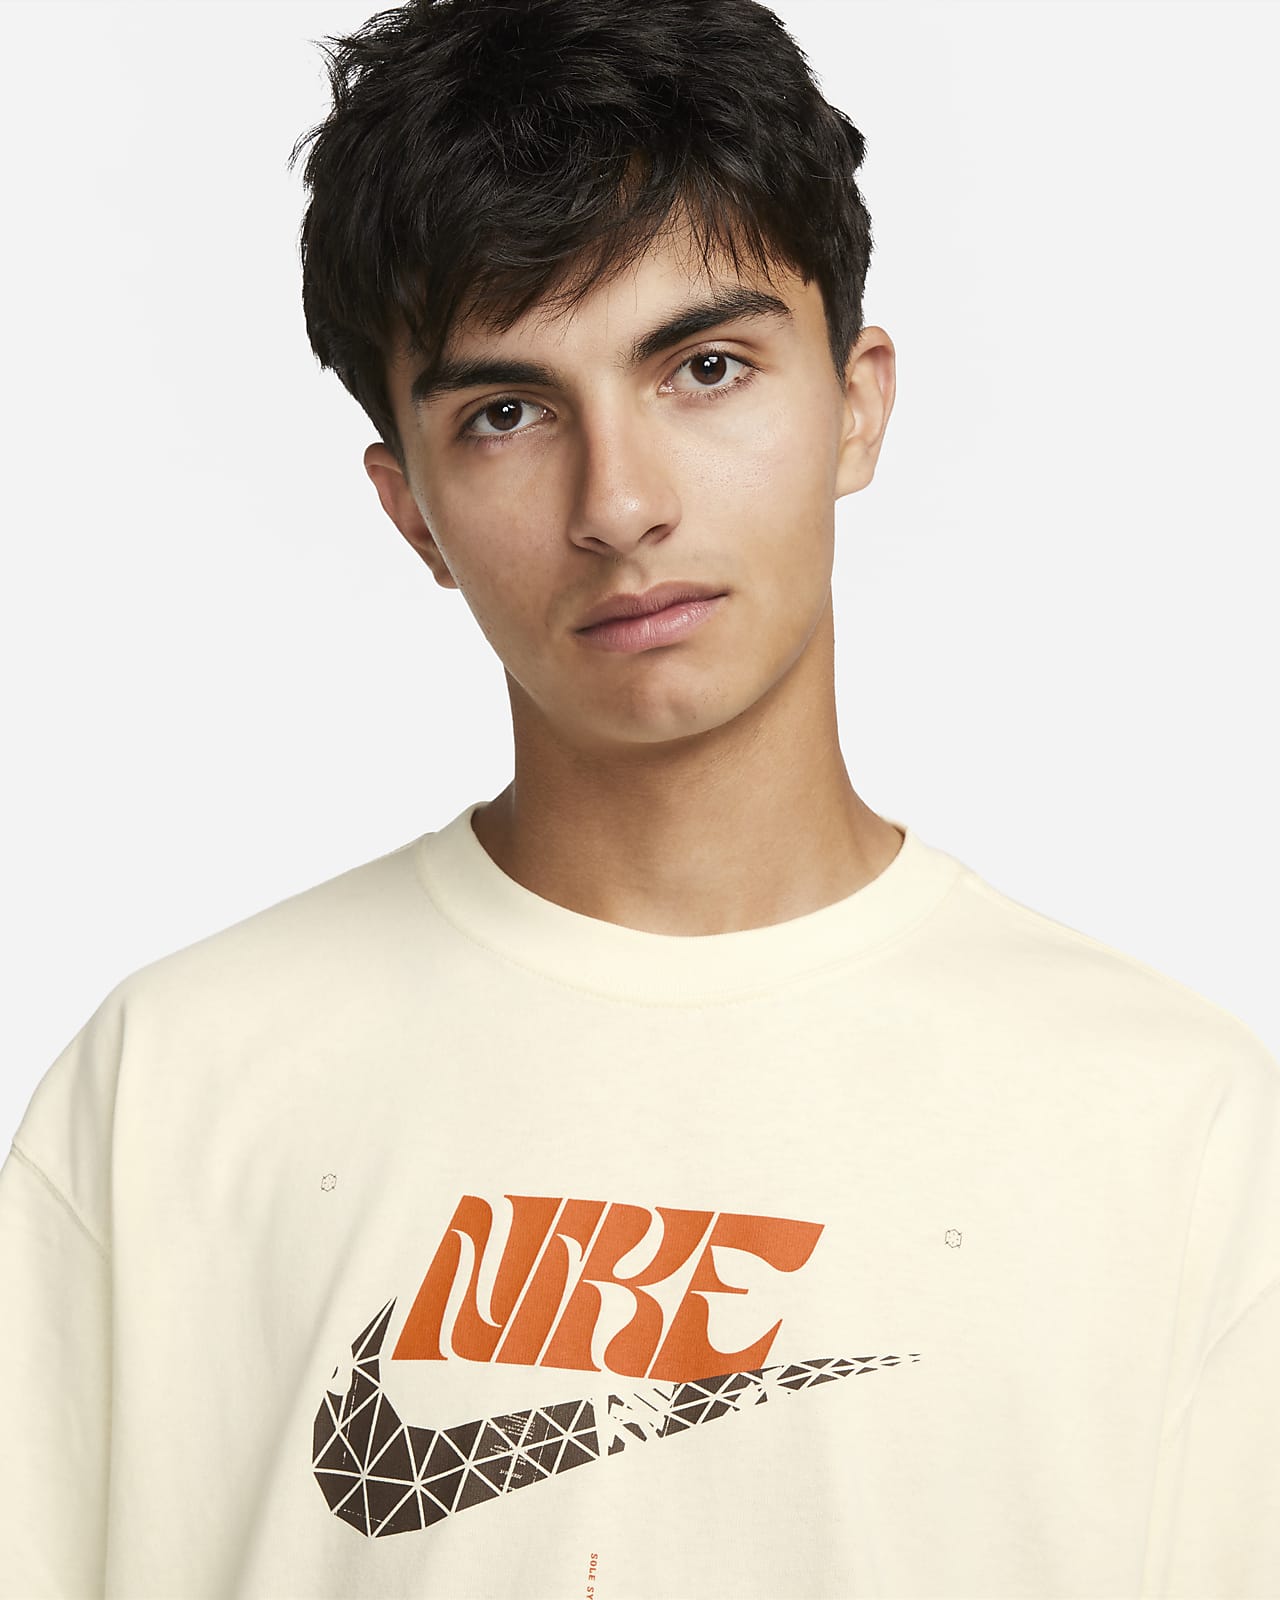 T-shirt Max90 Nike Sportswear pour homme